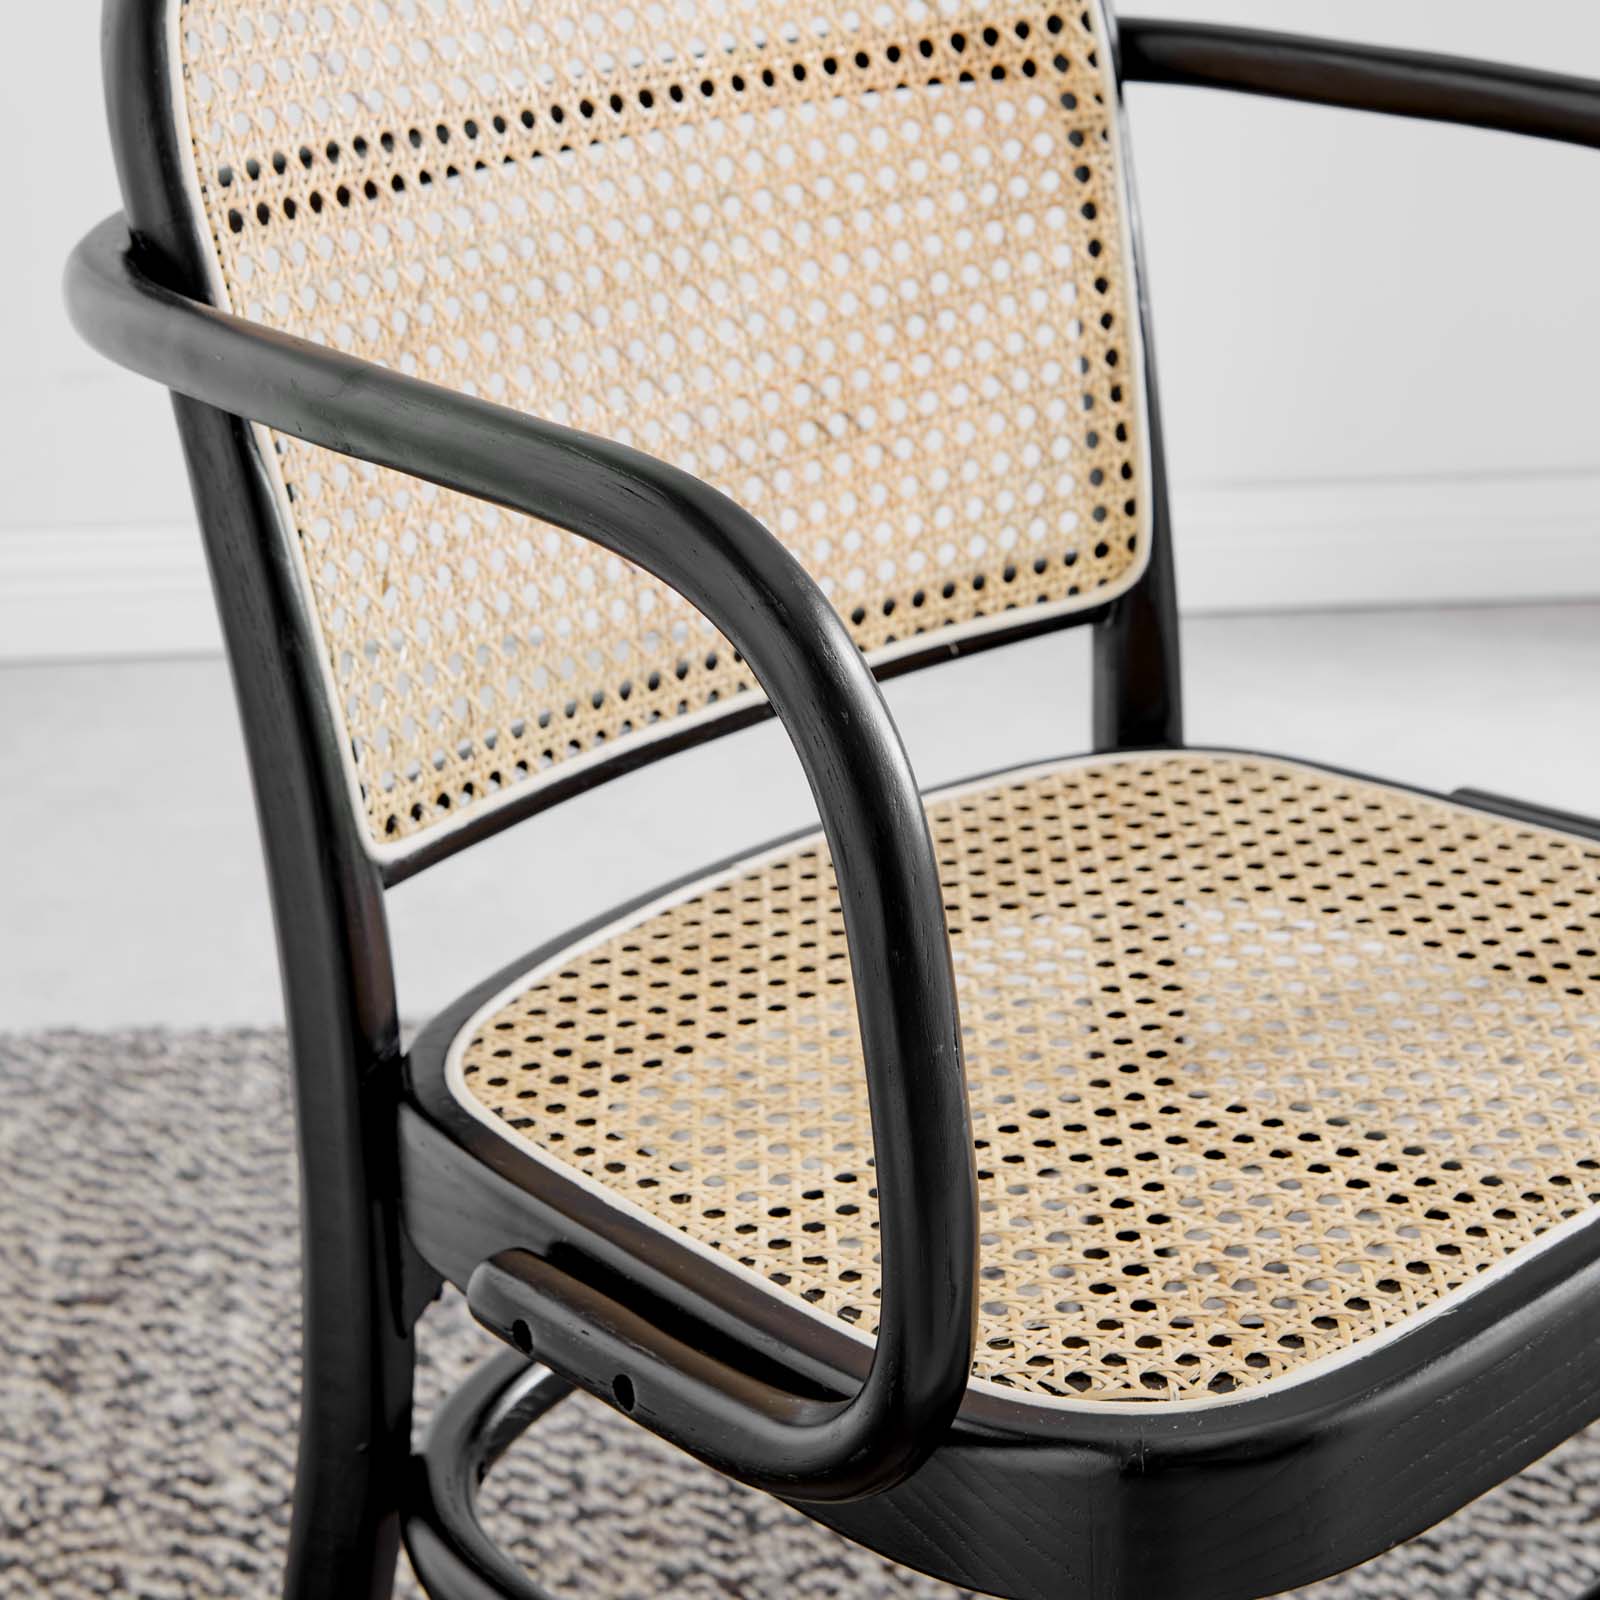 Winona Wood Dining Chair - East Shore Modern Home Furnishings